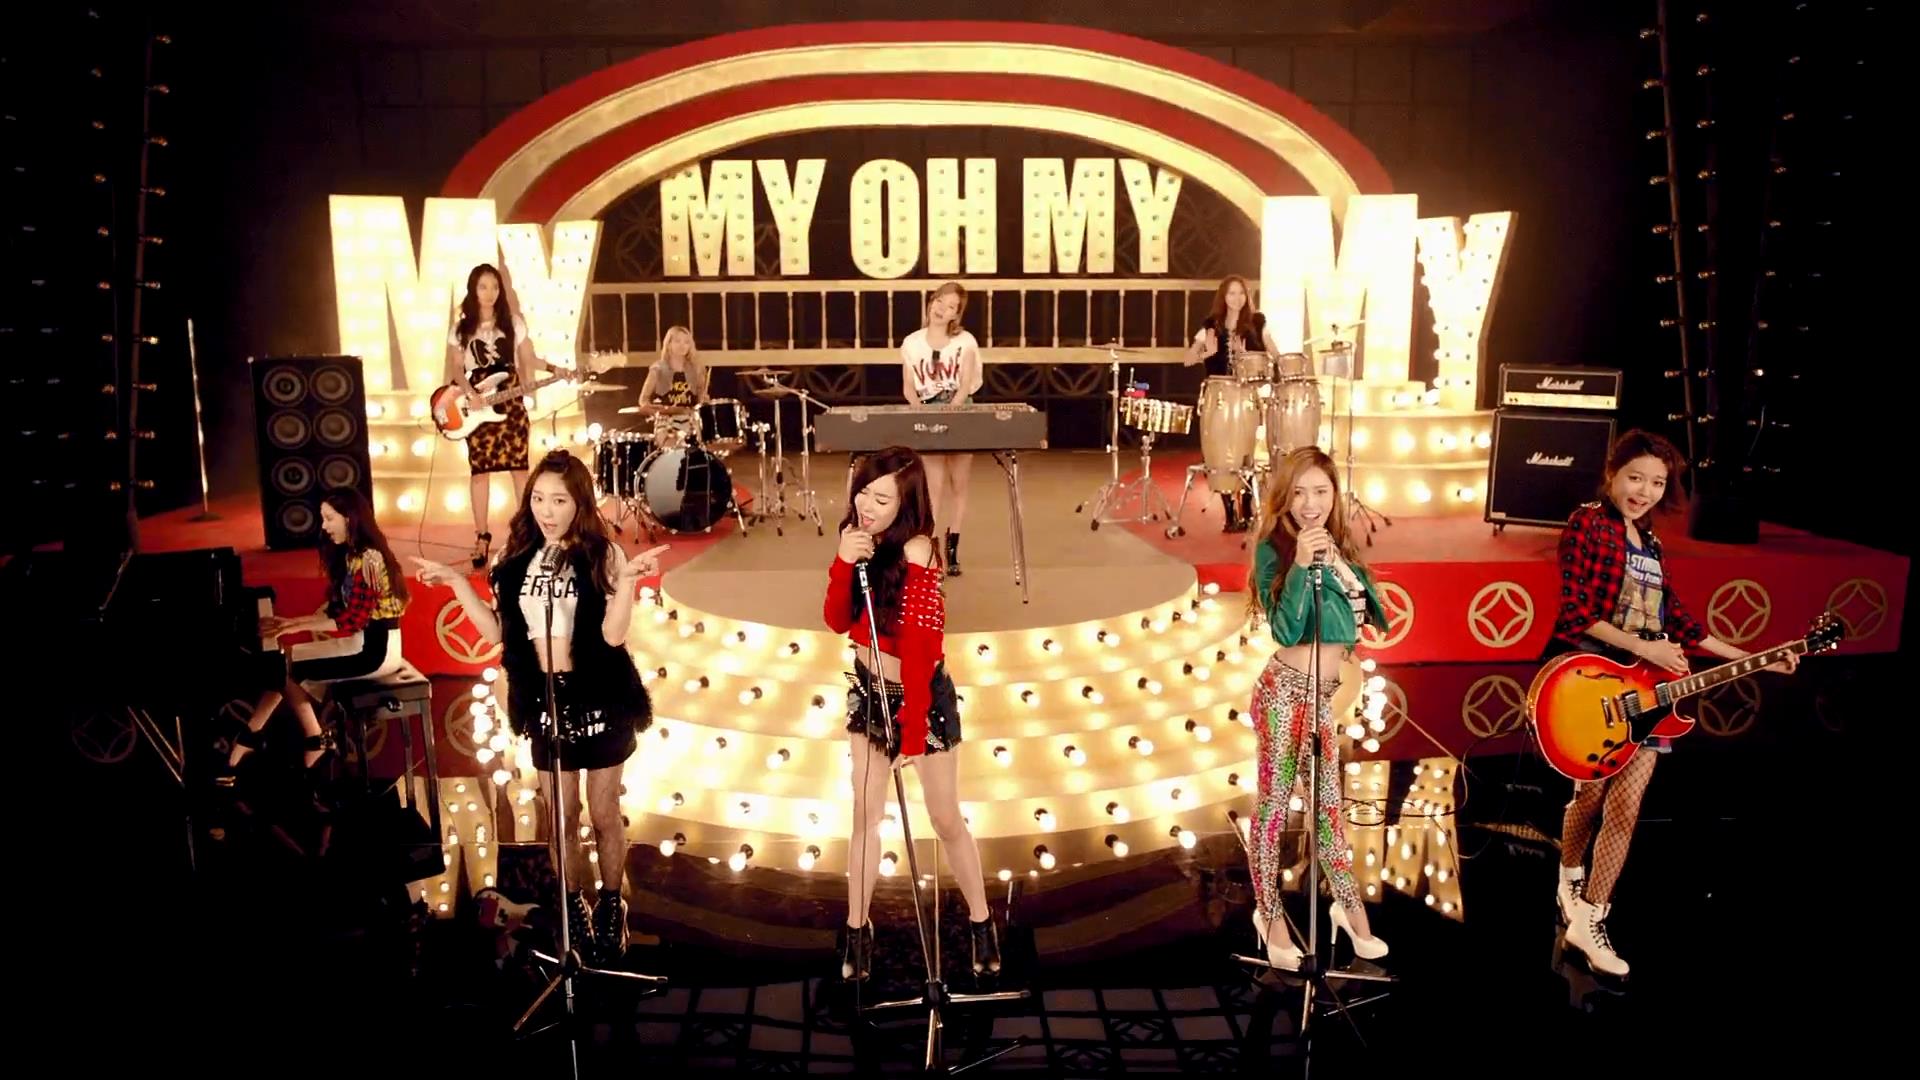 Girls' Generation libera el video musical de "My oh My" Myohmyohmyohmyohmy